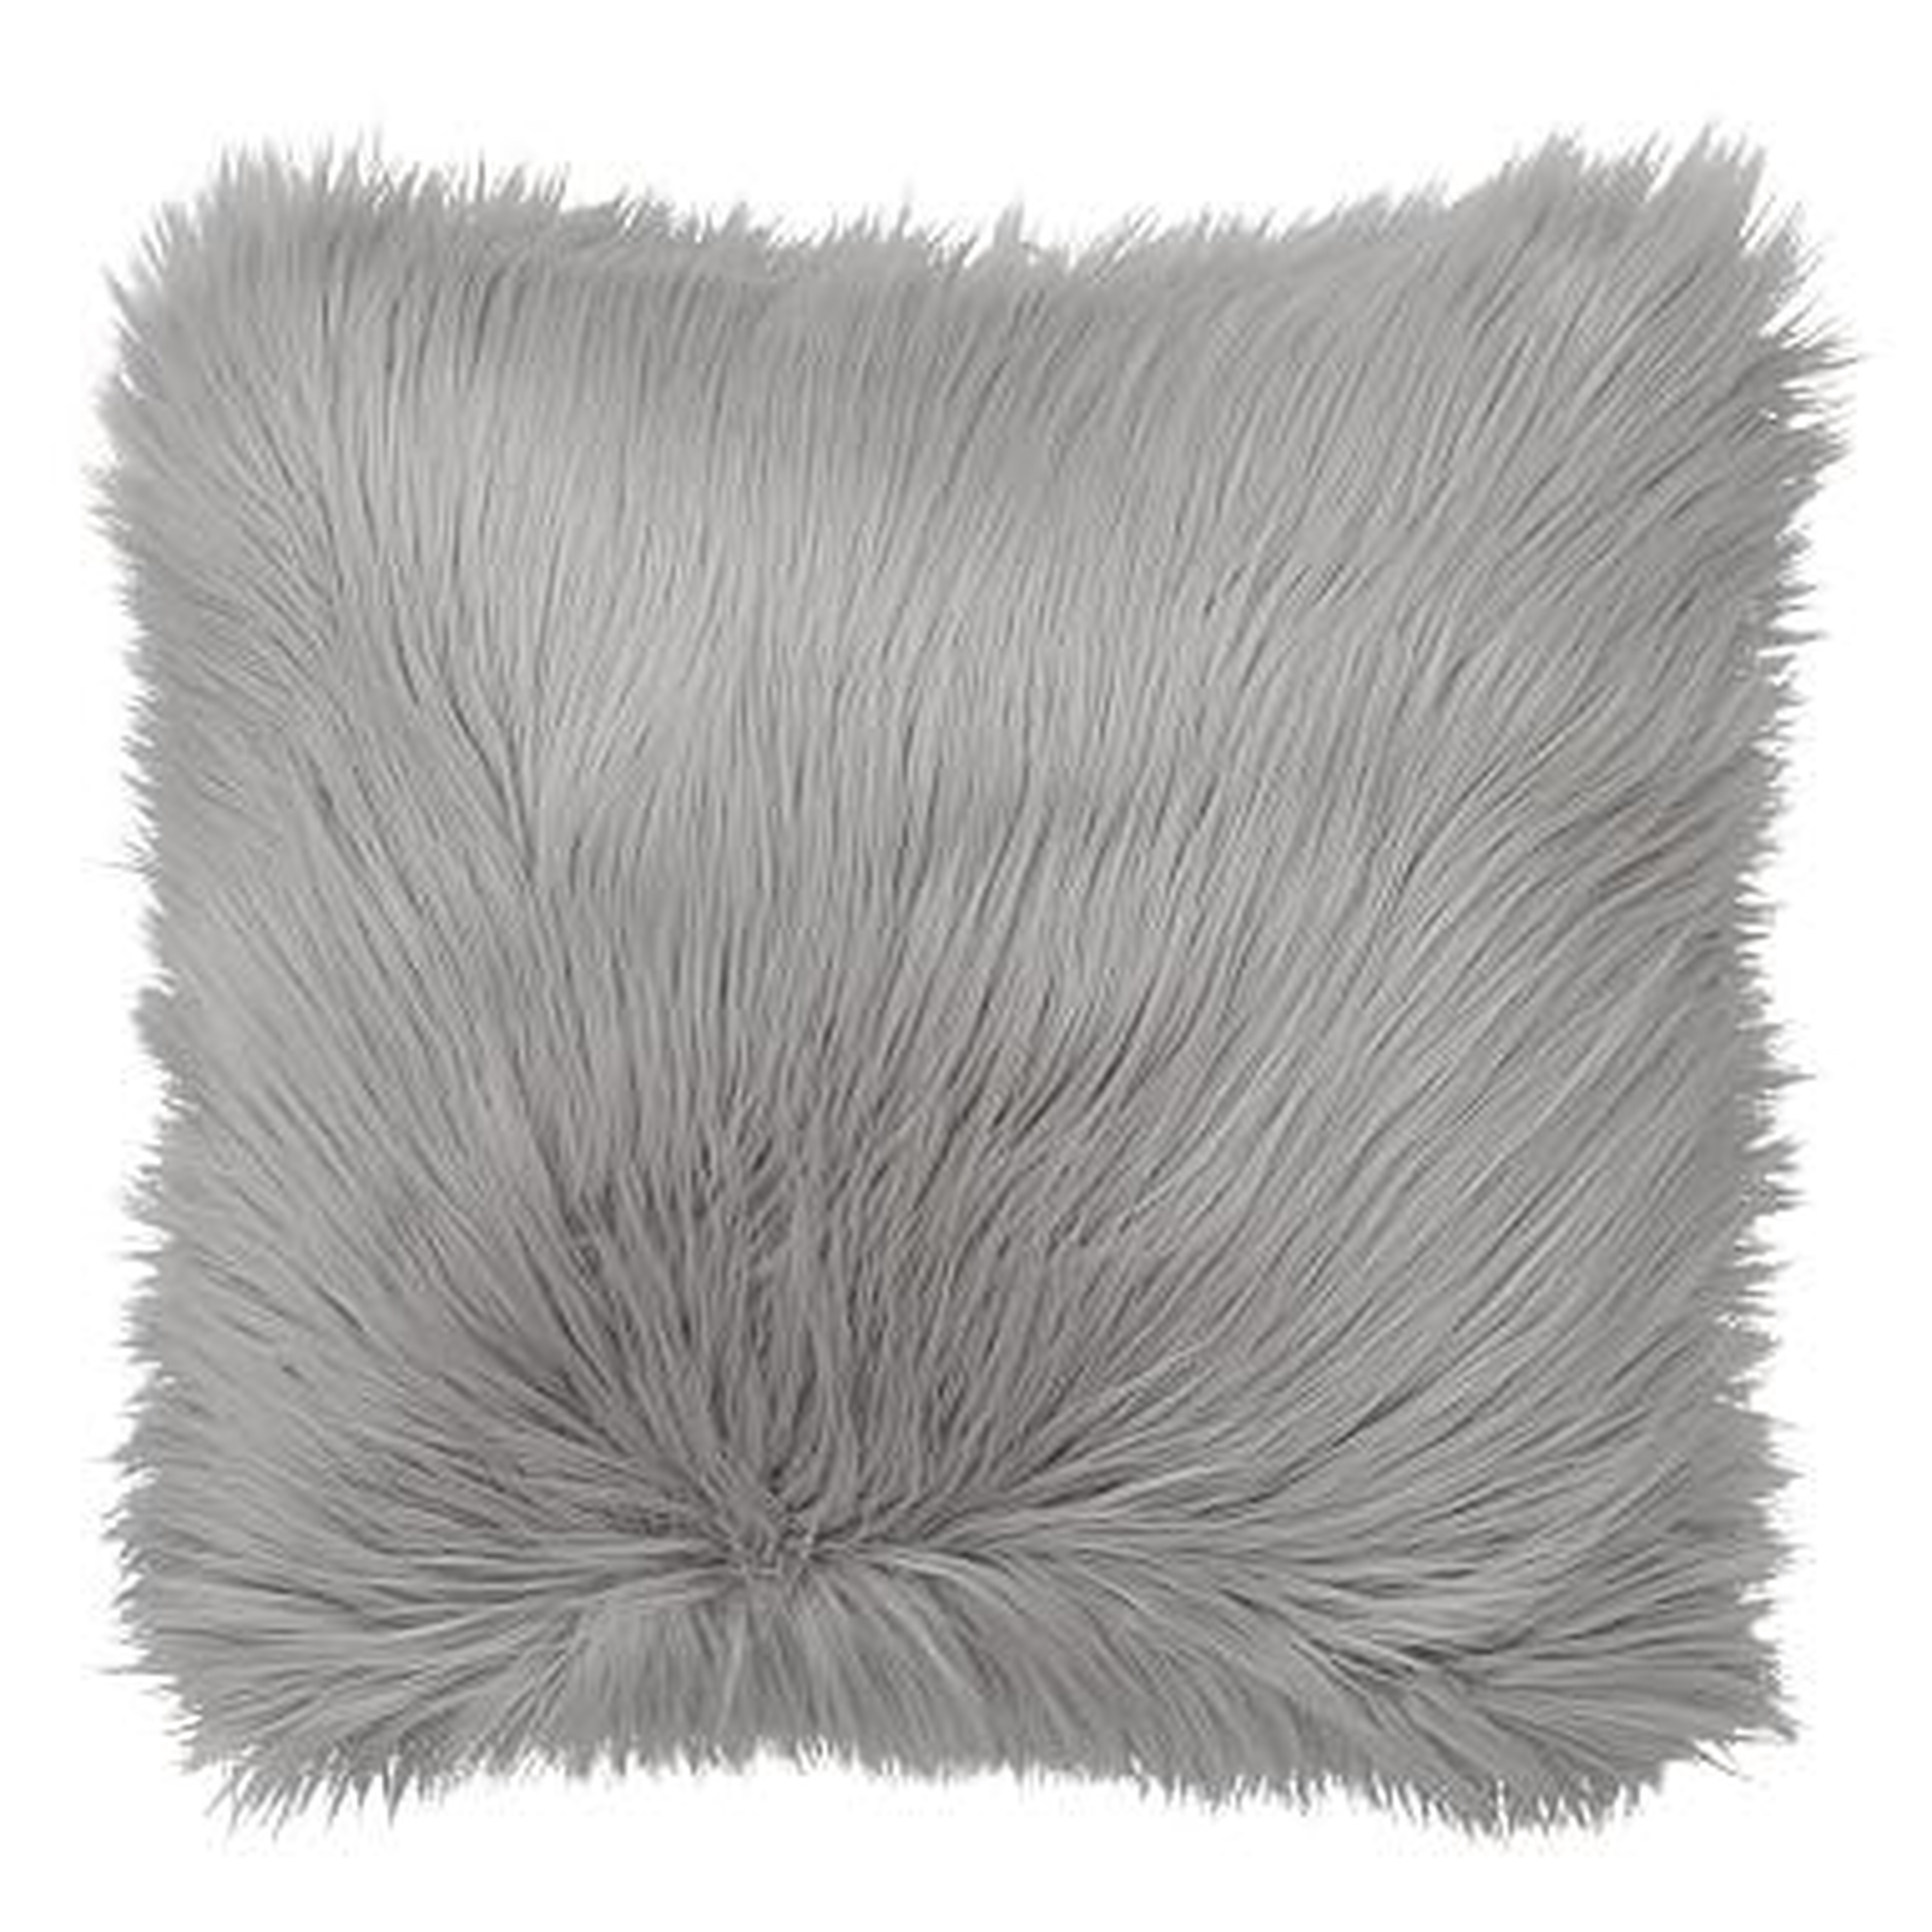 Fur-Rific Faux Fur-Pillow Cover, Himalayan Grey - Pottery Barn Teen